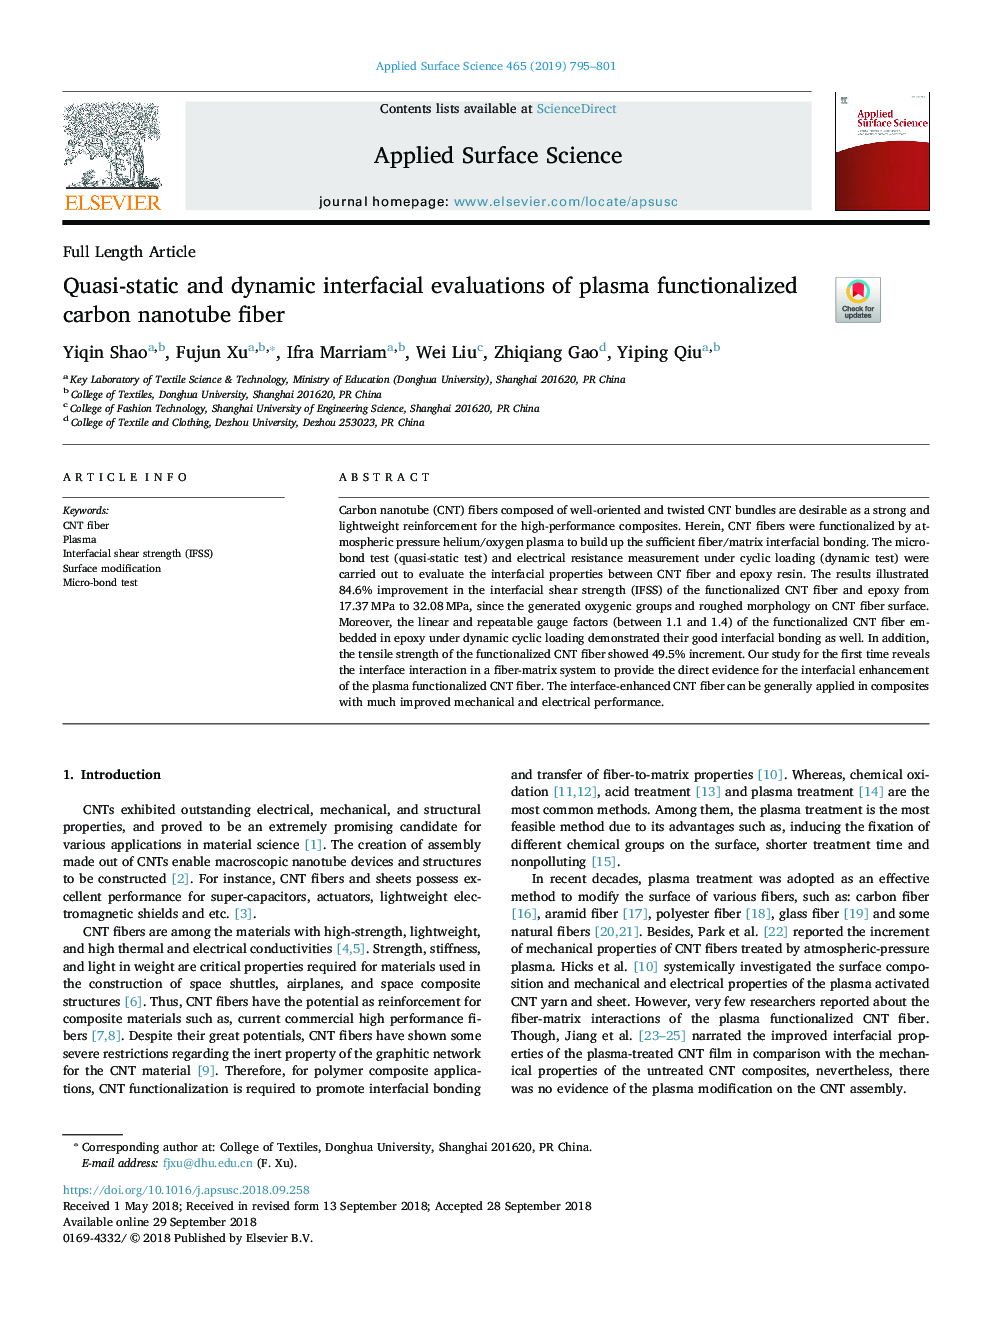 Quasi-static and dynamic interfacial evaluations of plasma functionalized carbon nanotube fiber